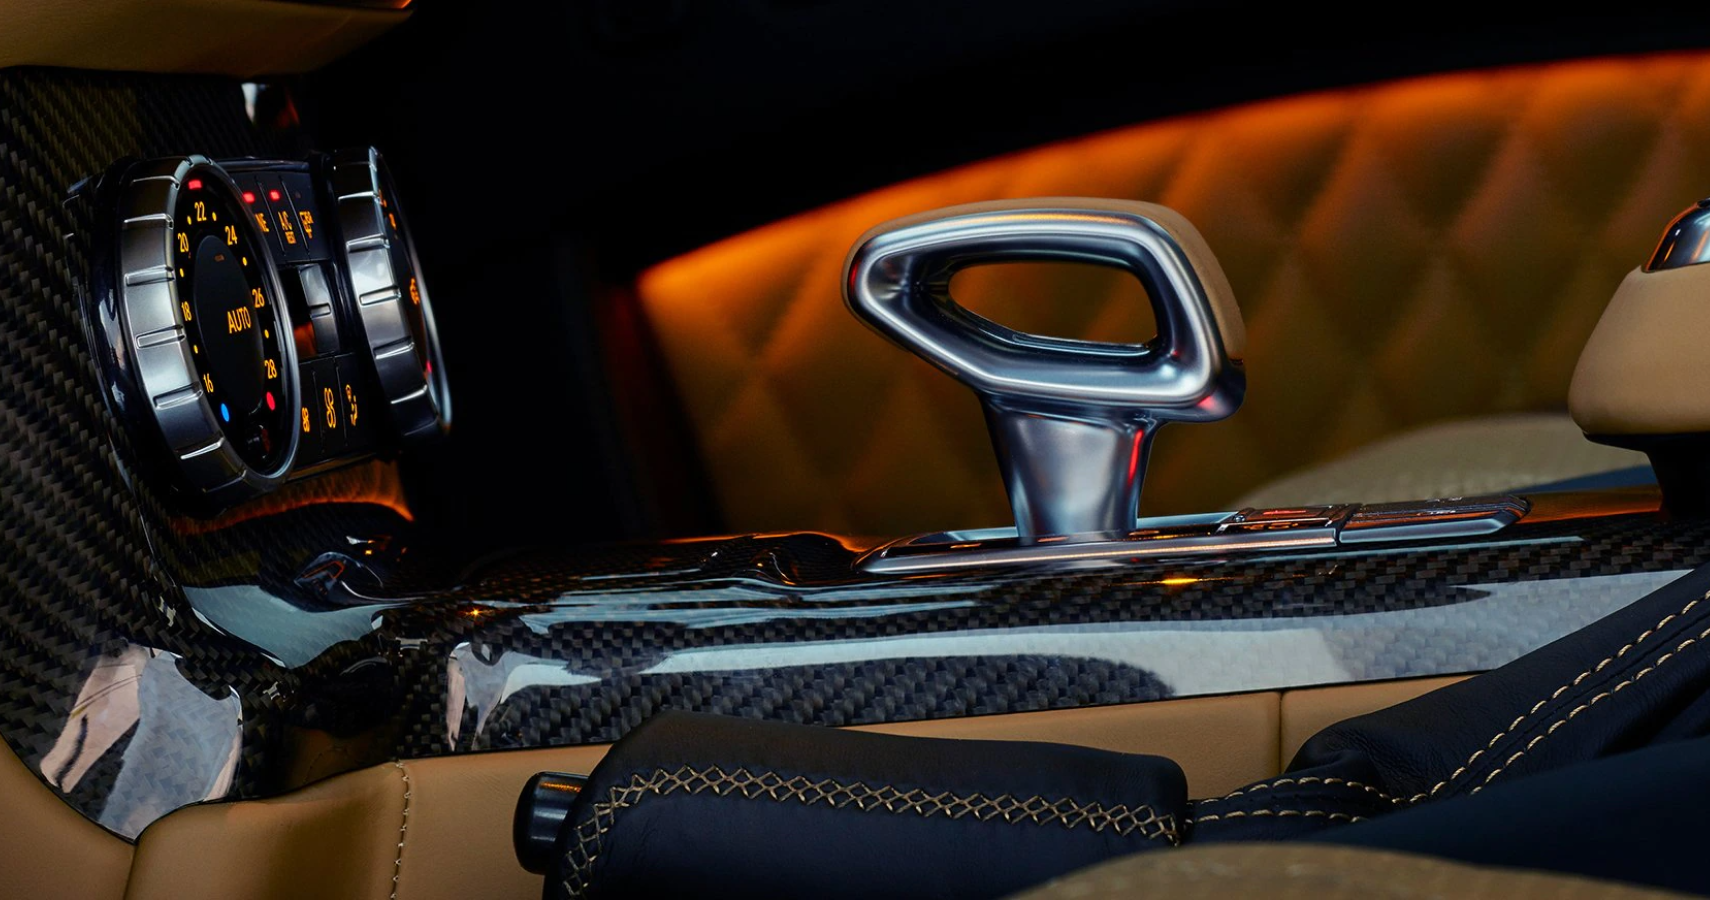 Mercedes Maybach G650 Landaulet center console close-up view